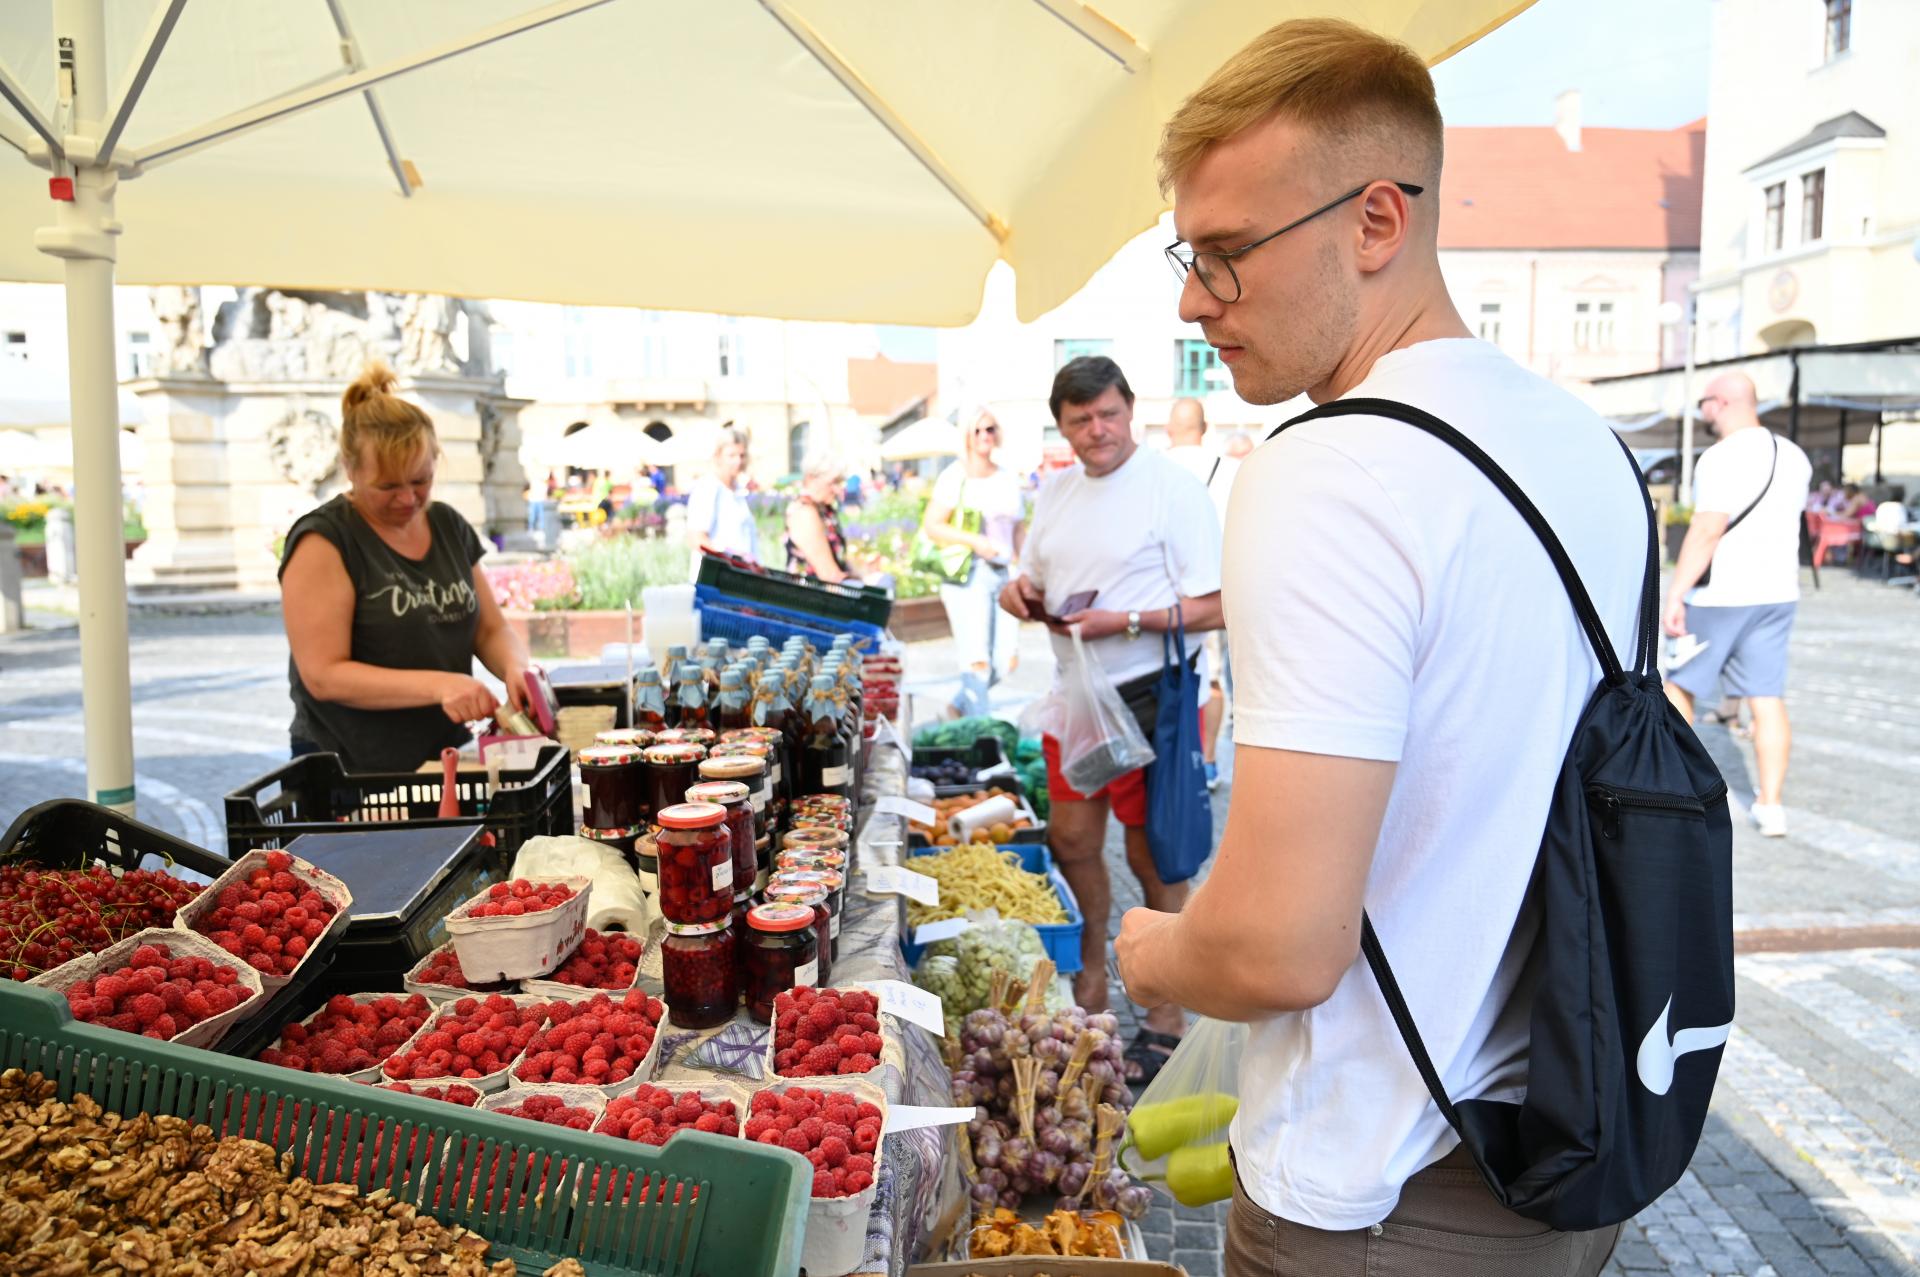 Medziročná inflácia v Česku dosiahla v júli 17,5 percenta, vzrástla po trinásty raz za sebou